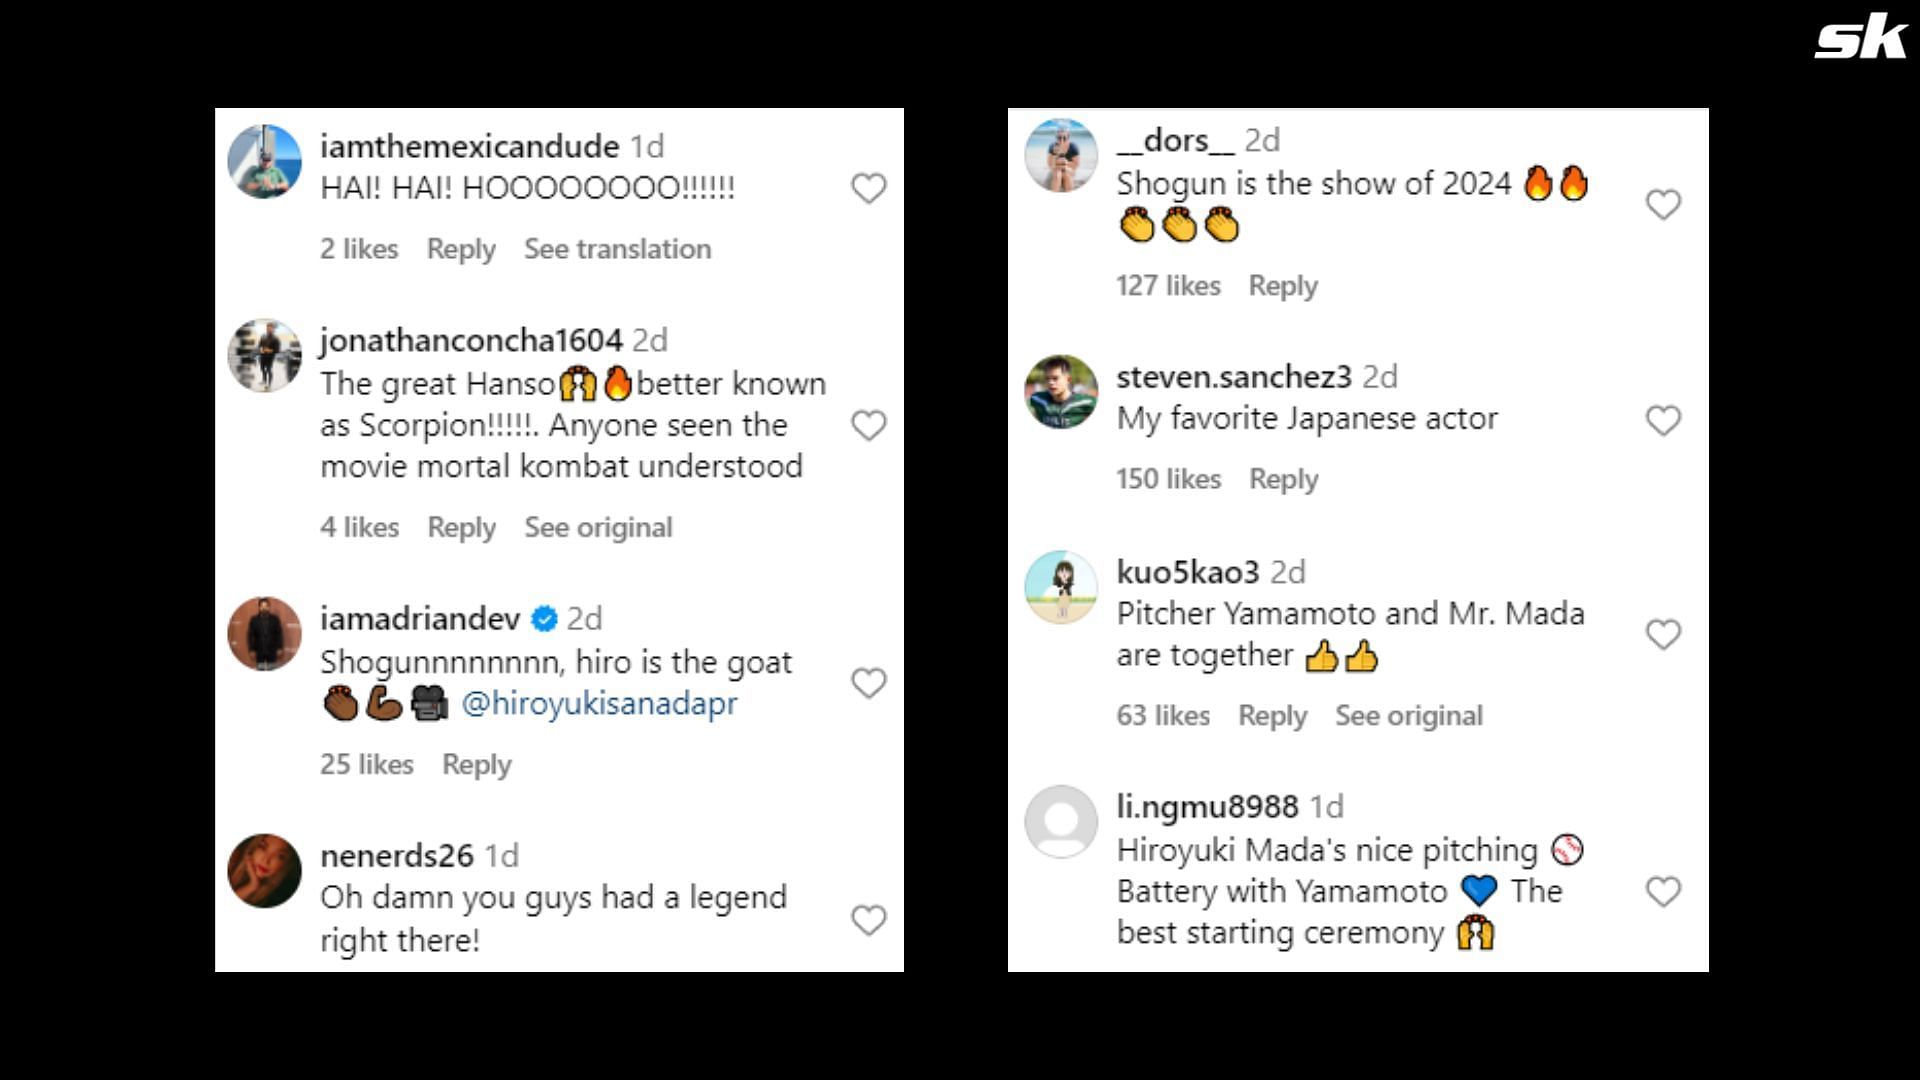 Screenshot of Fan Reactions to Dodgers Instagram post